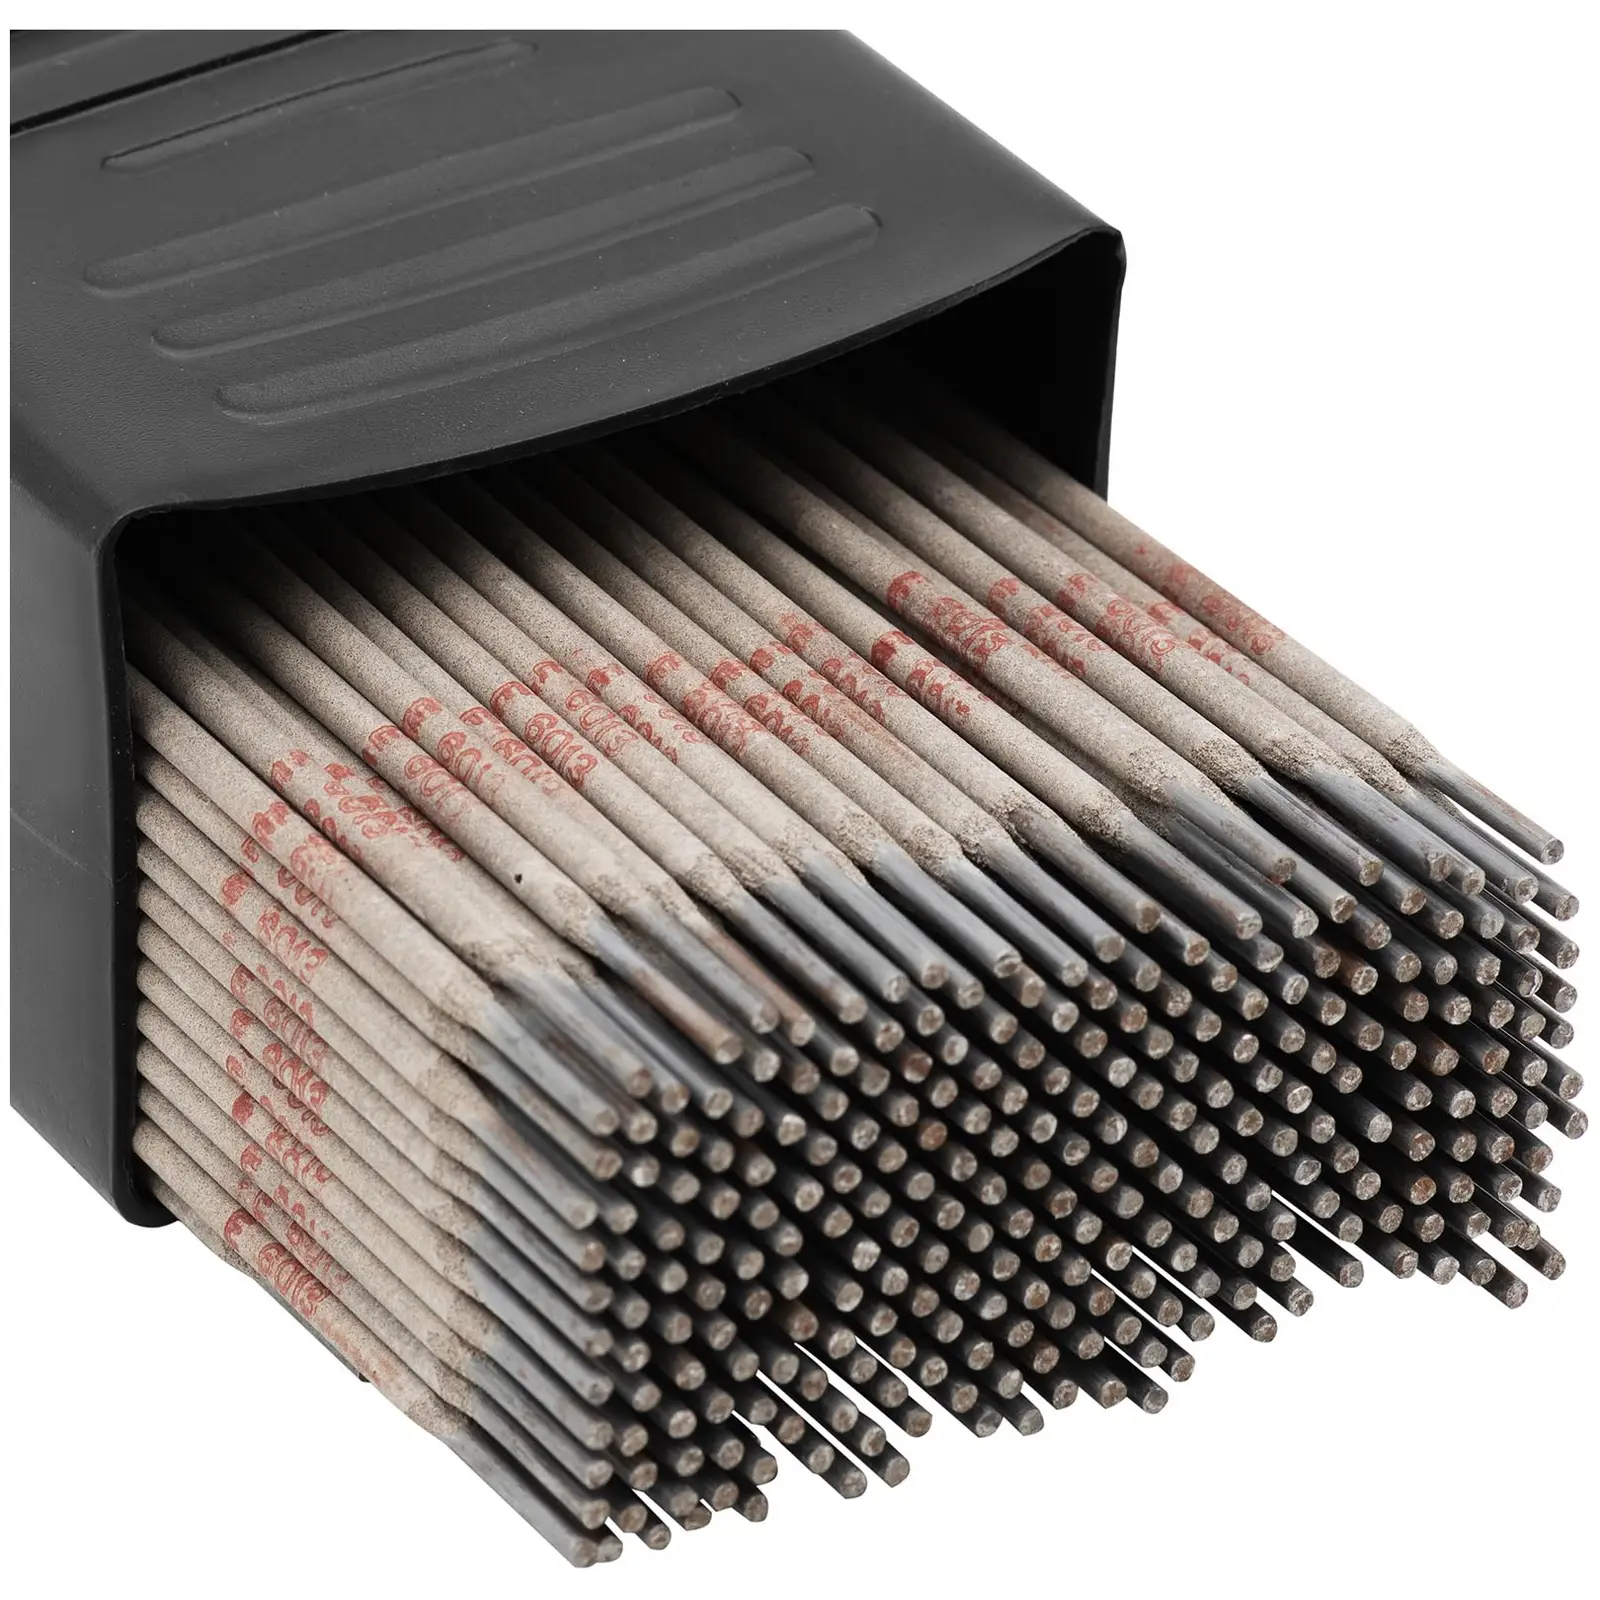 Svetselektroder - E6013 - Rutil-cellulosa - Ø 2.5 x 350 mm - 5 kg